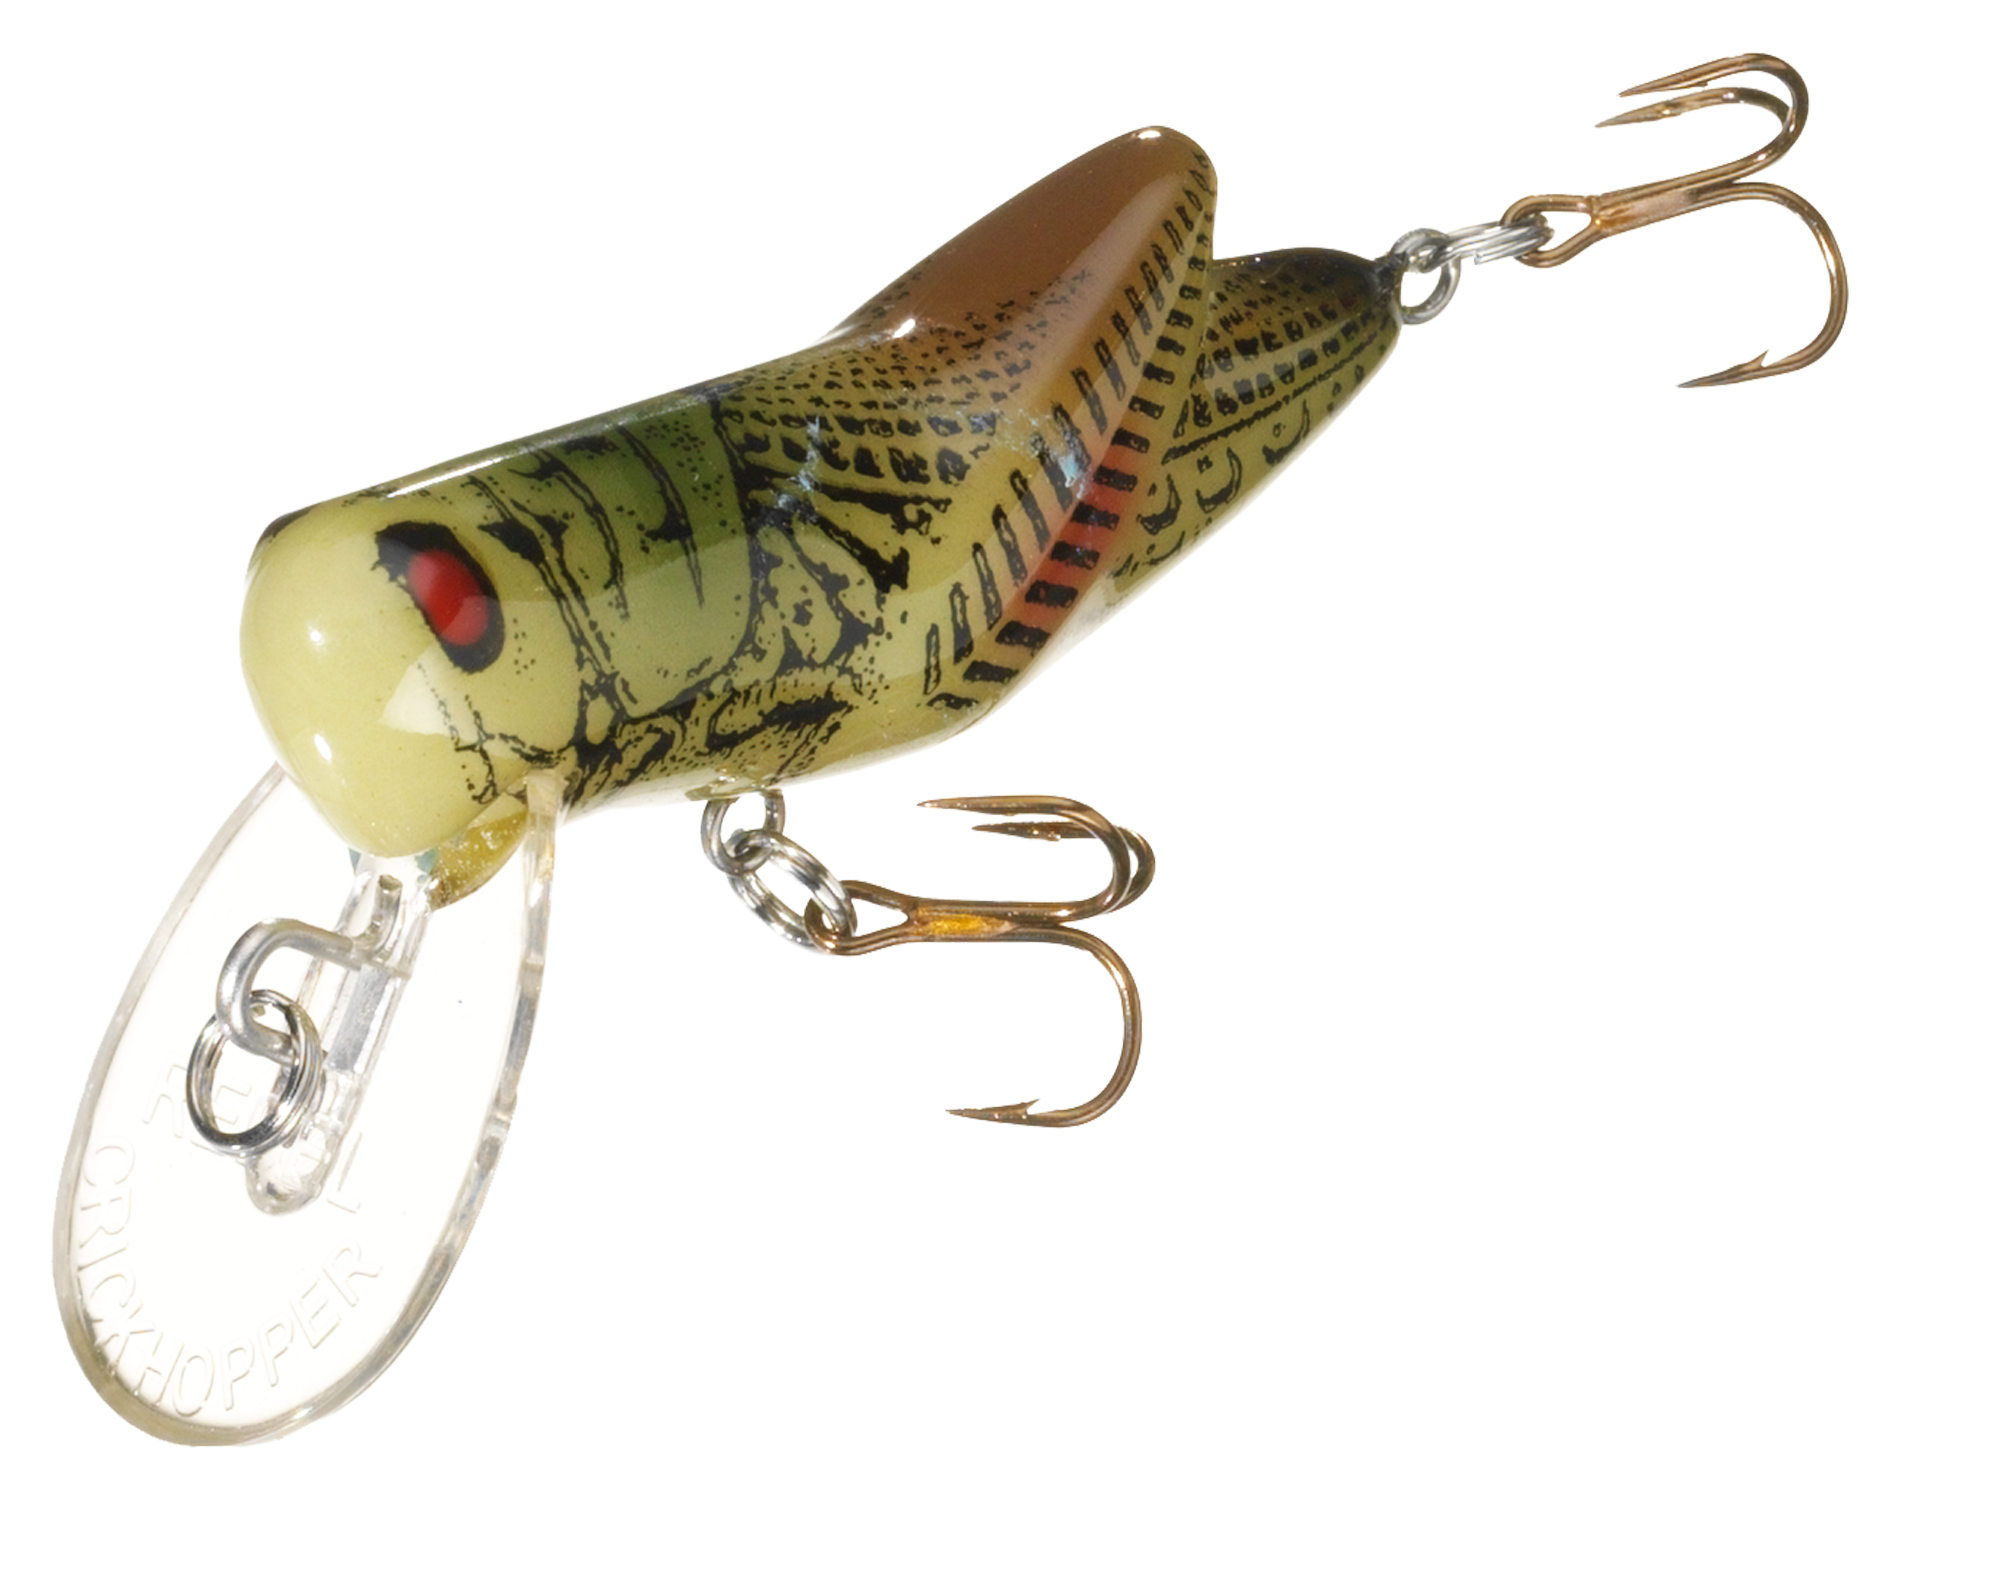 REBEL Crickhopper Series F73553 Fishing Lure, Crankbait, Bass, Gamefish,  Trout, Sunburst Lure D&B Supply